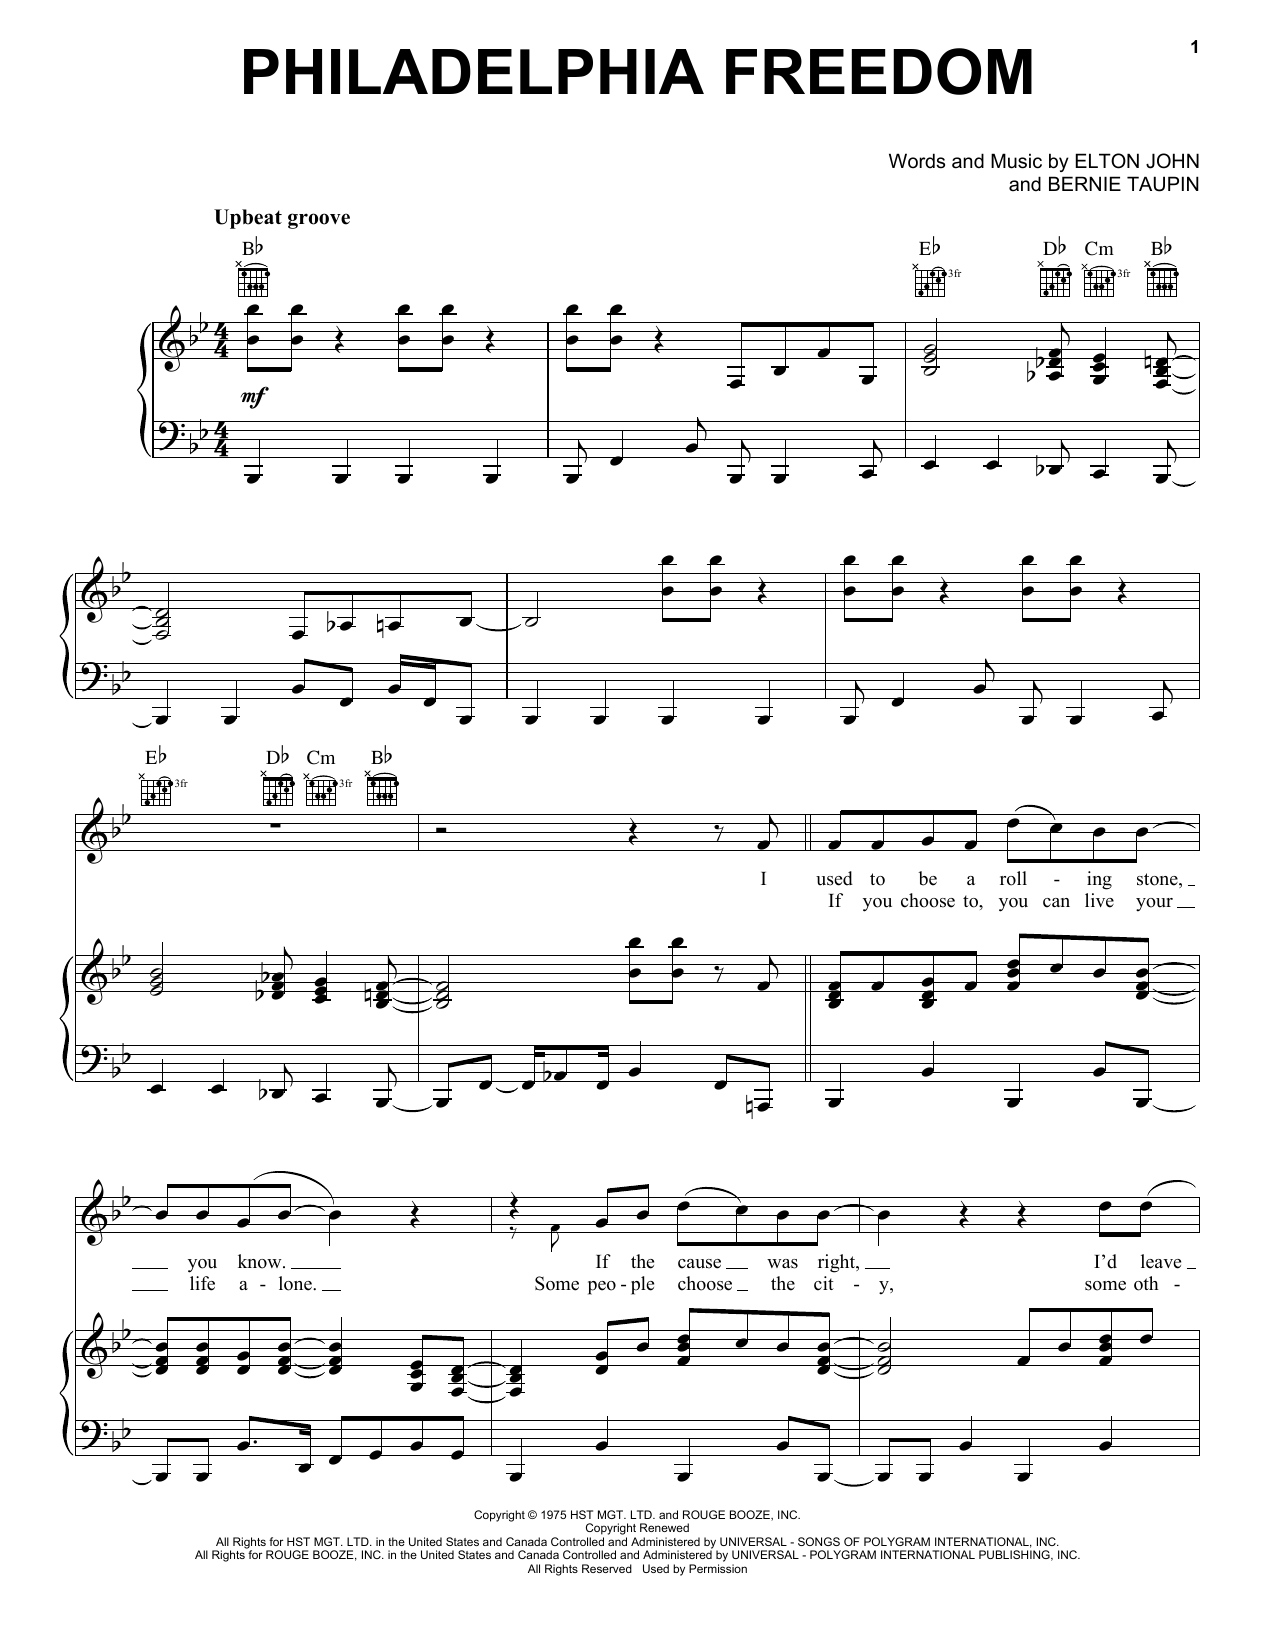 Elton John Philadelphia Freedom Sheet Music Notes & Chords for Real Book – Melody, Lyrics & Chords - Download or Print PDF